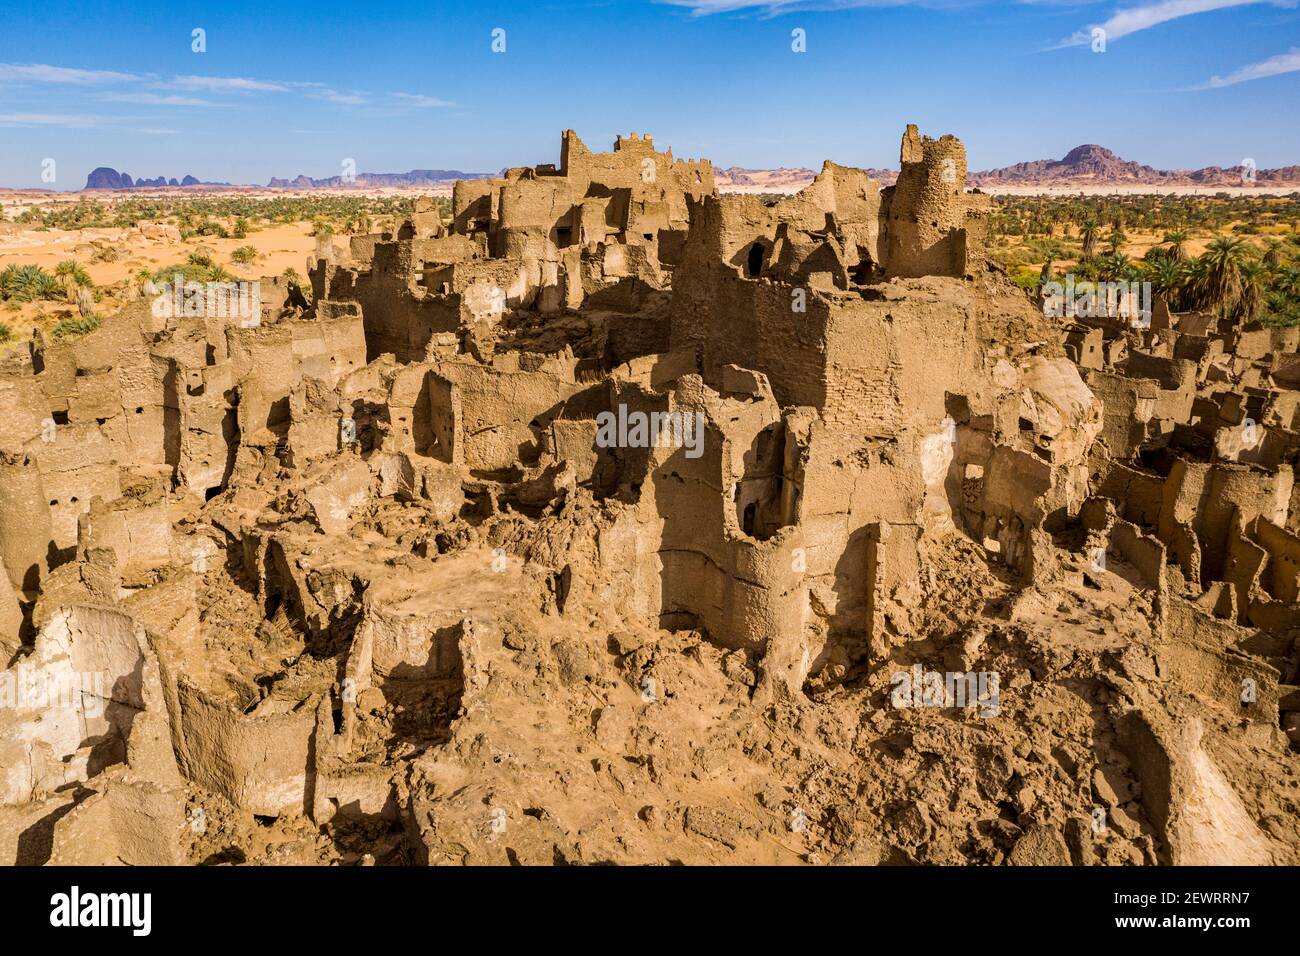 Fort von Pacot (Fort Djado), Djado Plateau, Tenere Wüste, Sahara, Niger, Afrika Stockfoto